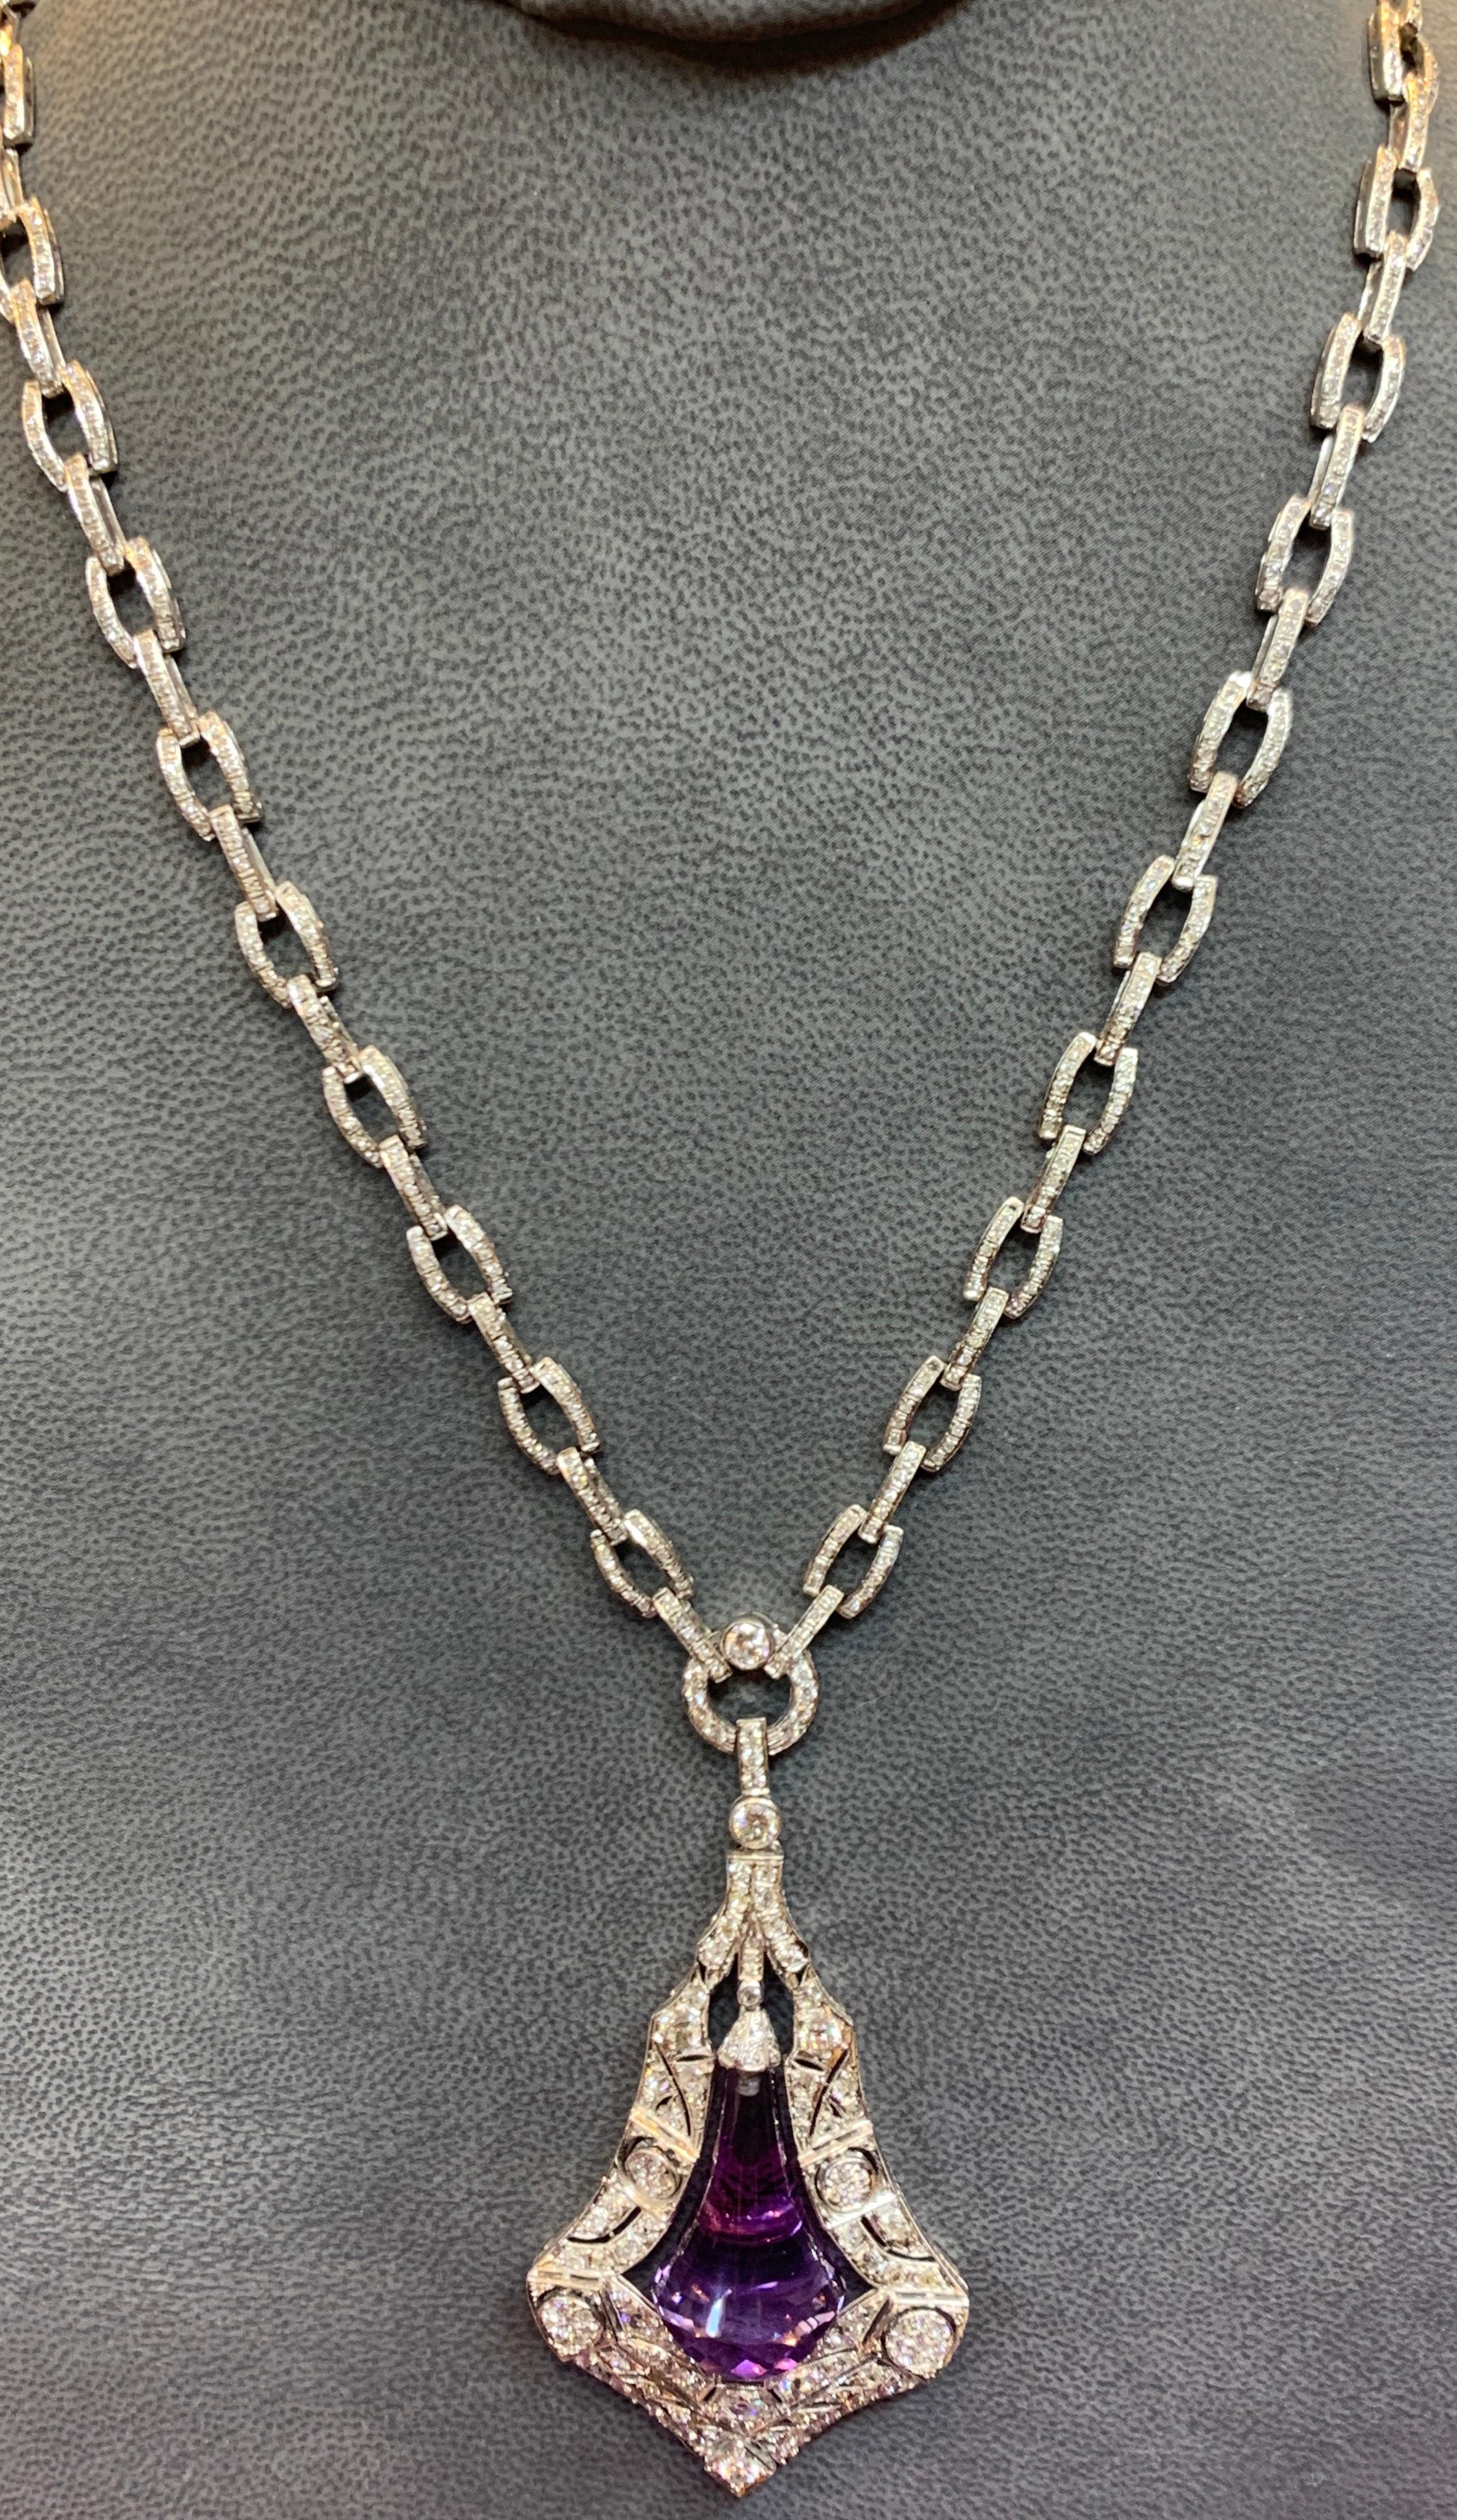 Amethyst & Diamond Drop  Pendant Necklace
Length: 26